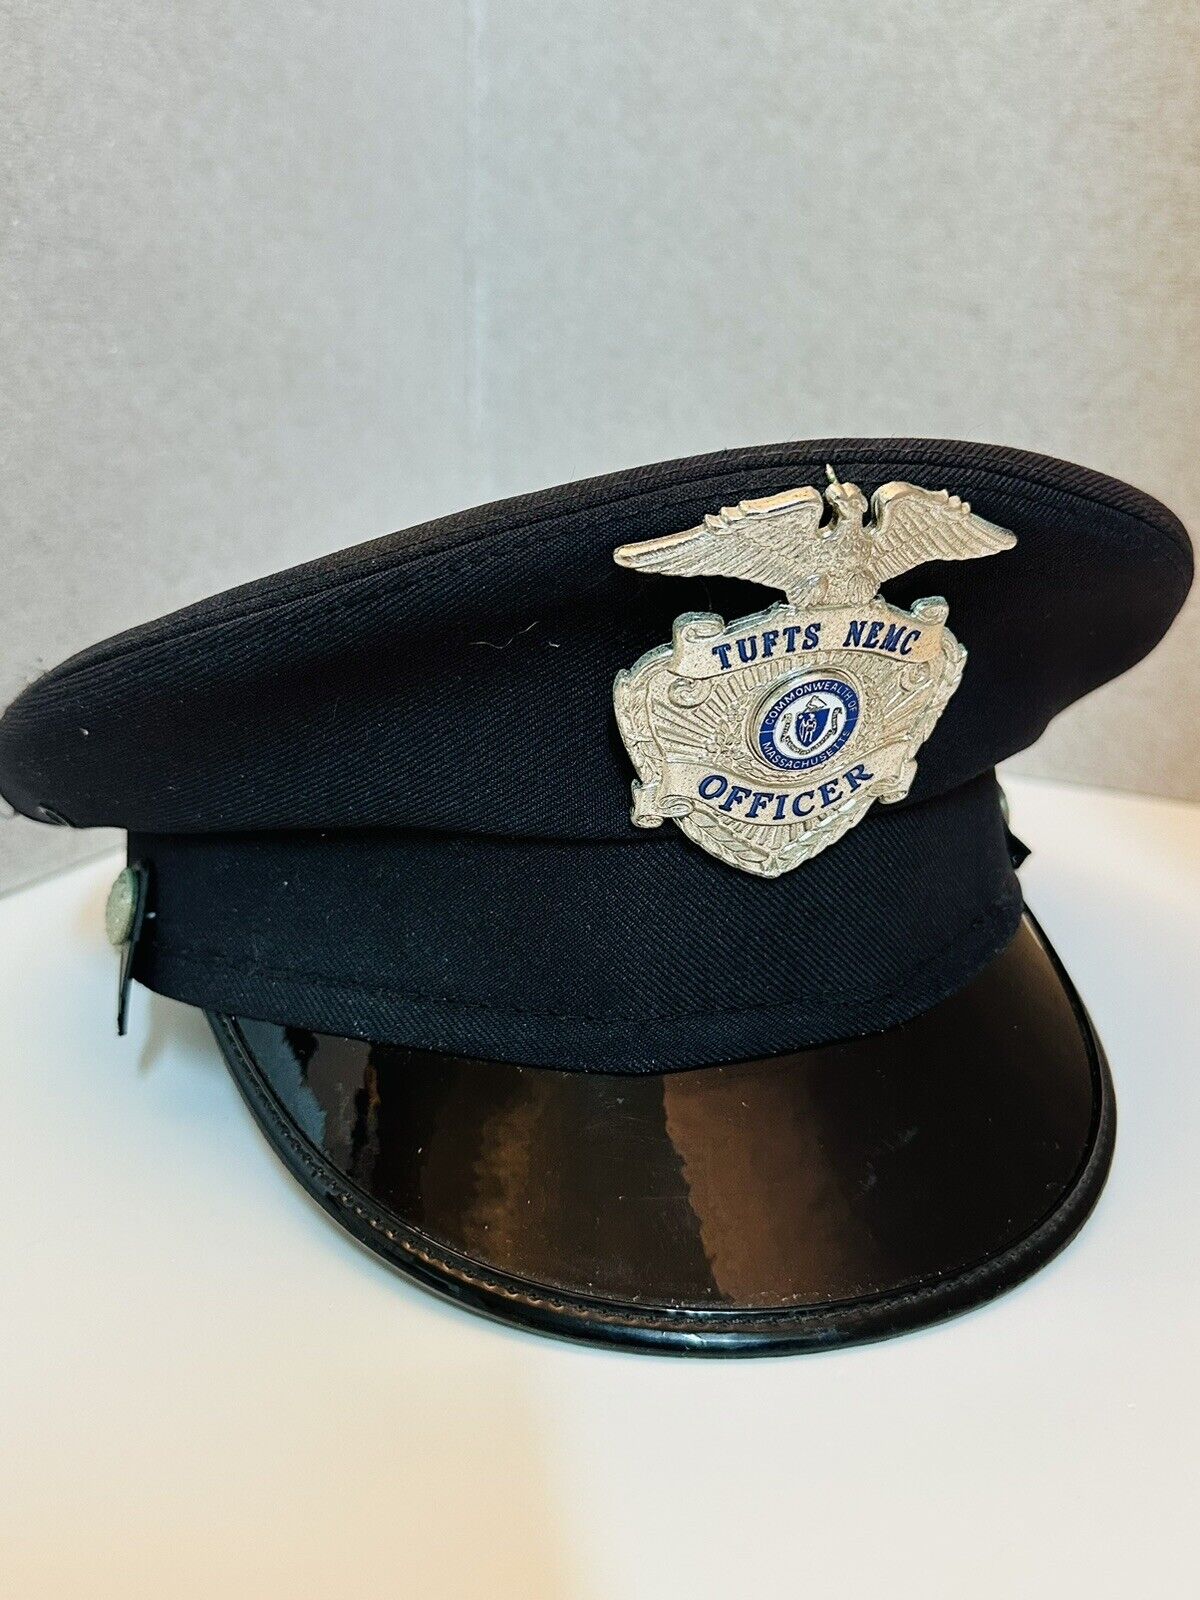 Vintage Massachusetts TUFTS NEMC OFFICER Badge and Hat New England Medical